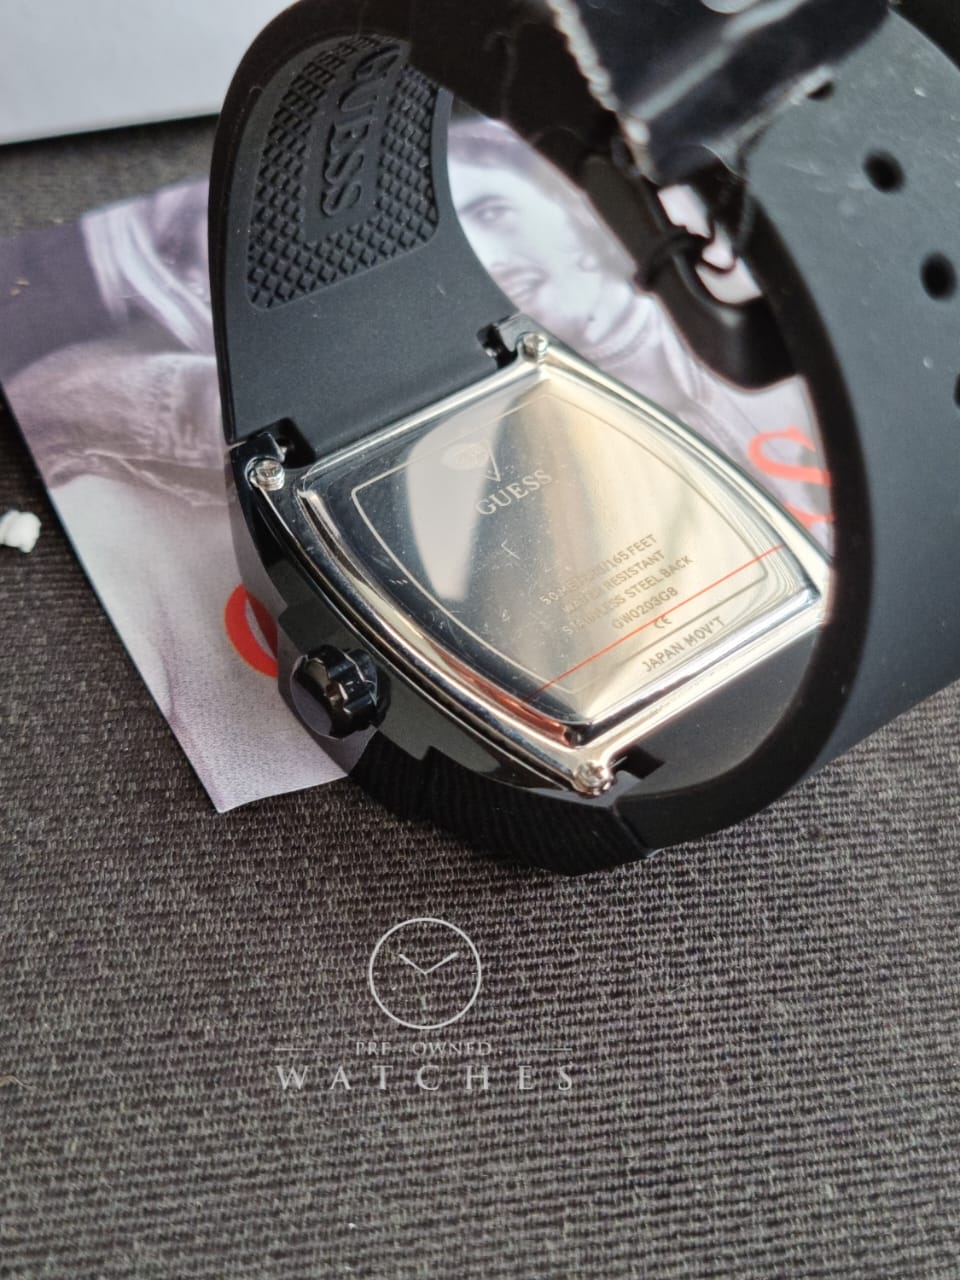 Guess Men’s Quartz Black Silicone Strap Black Dial 43mm Watch GW0203G8